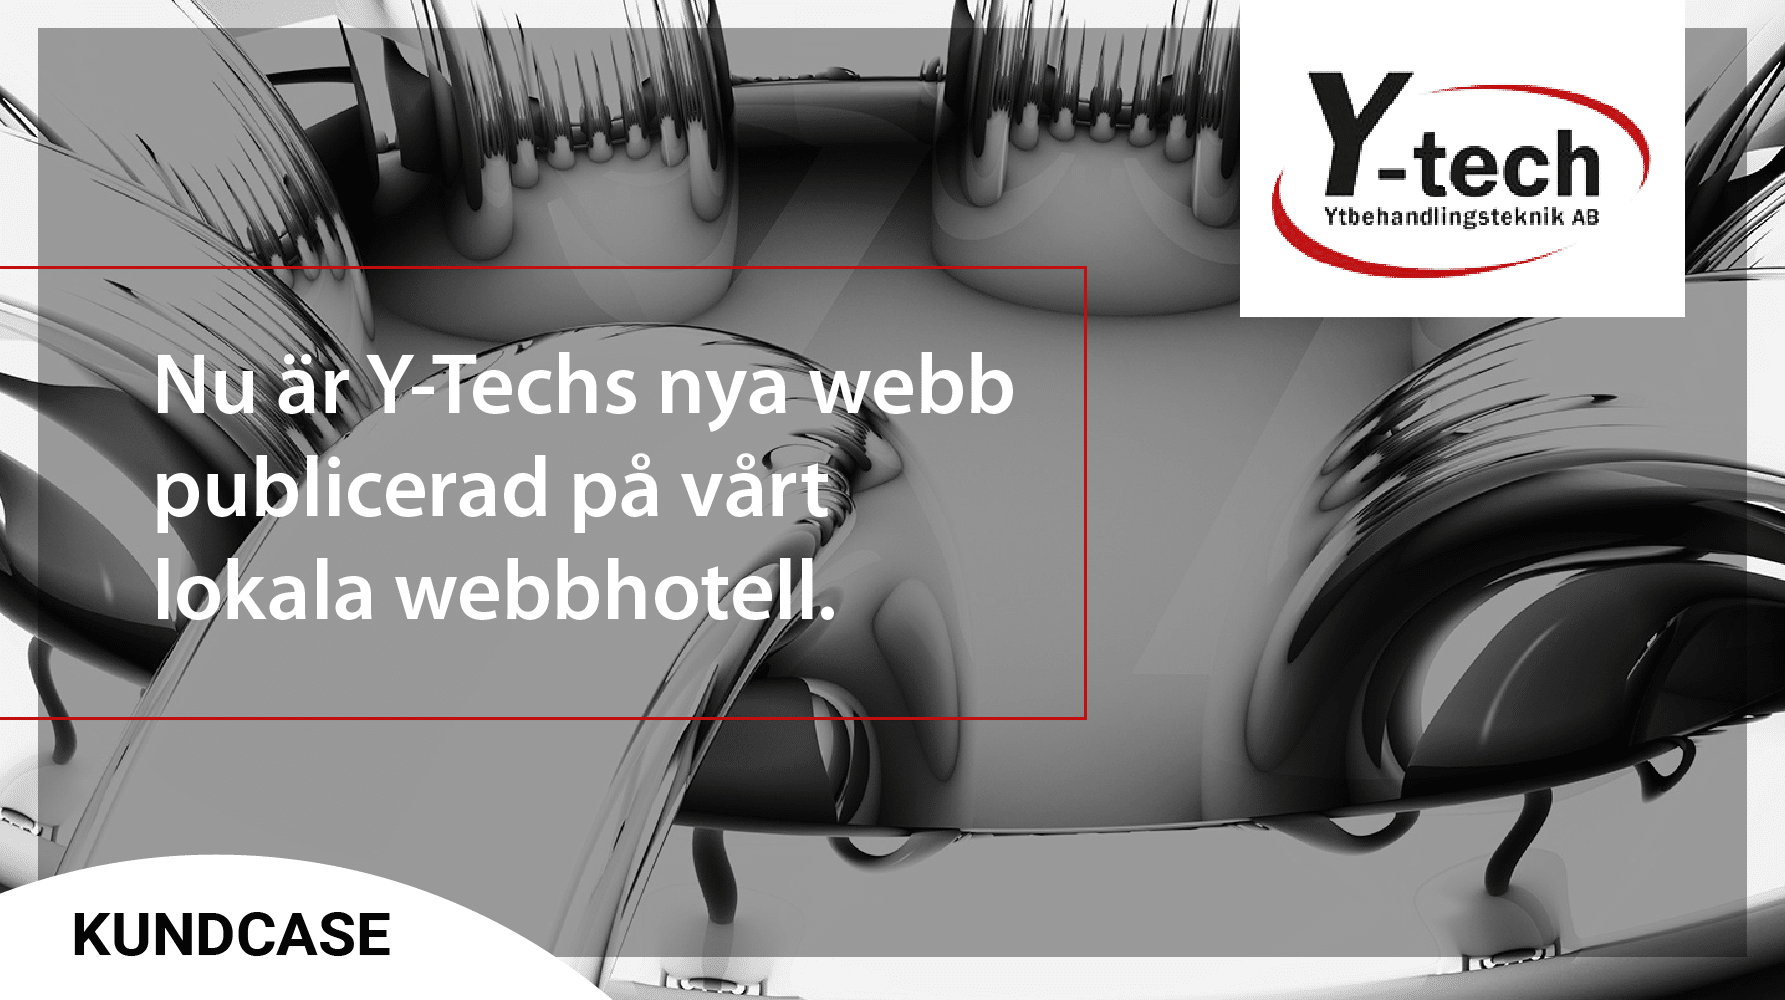 Ytech webb3